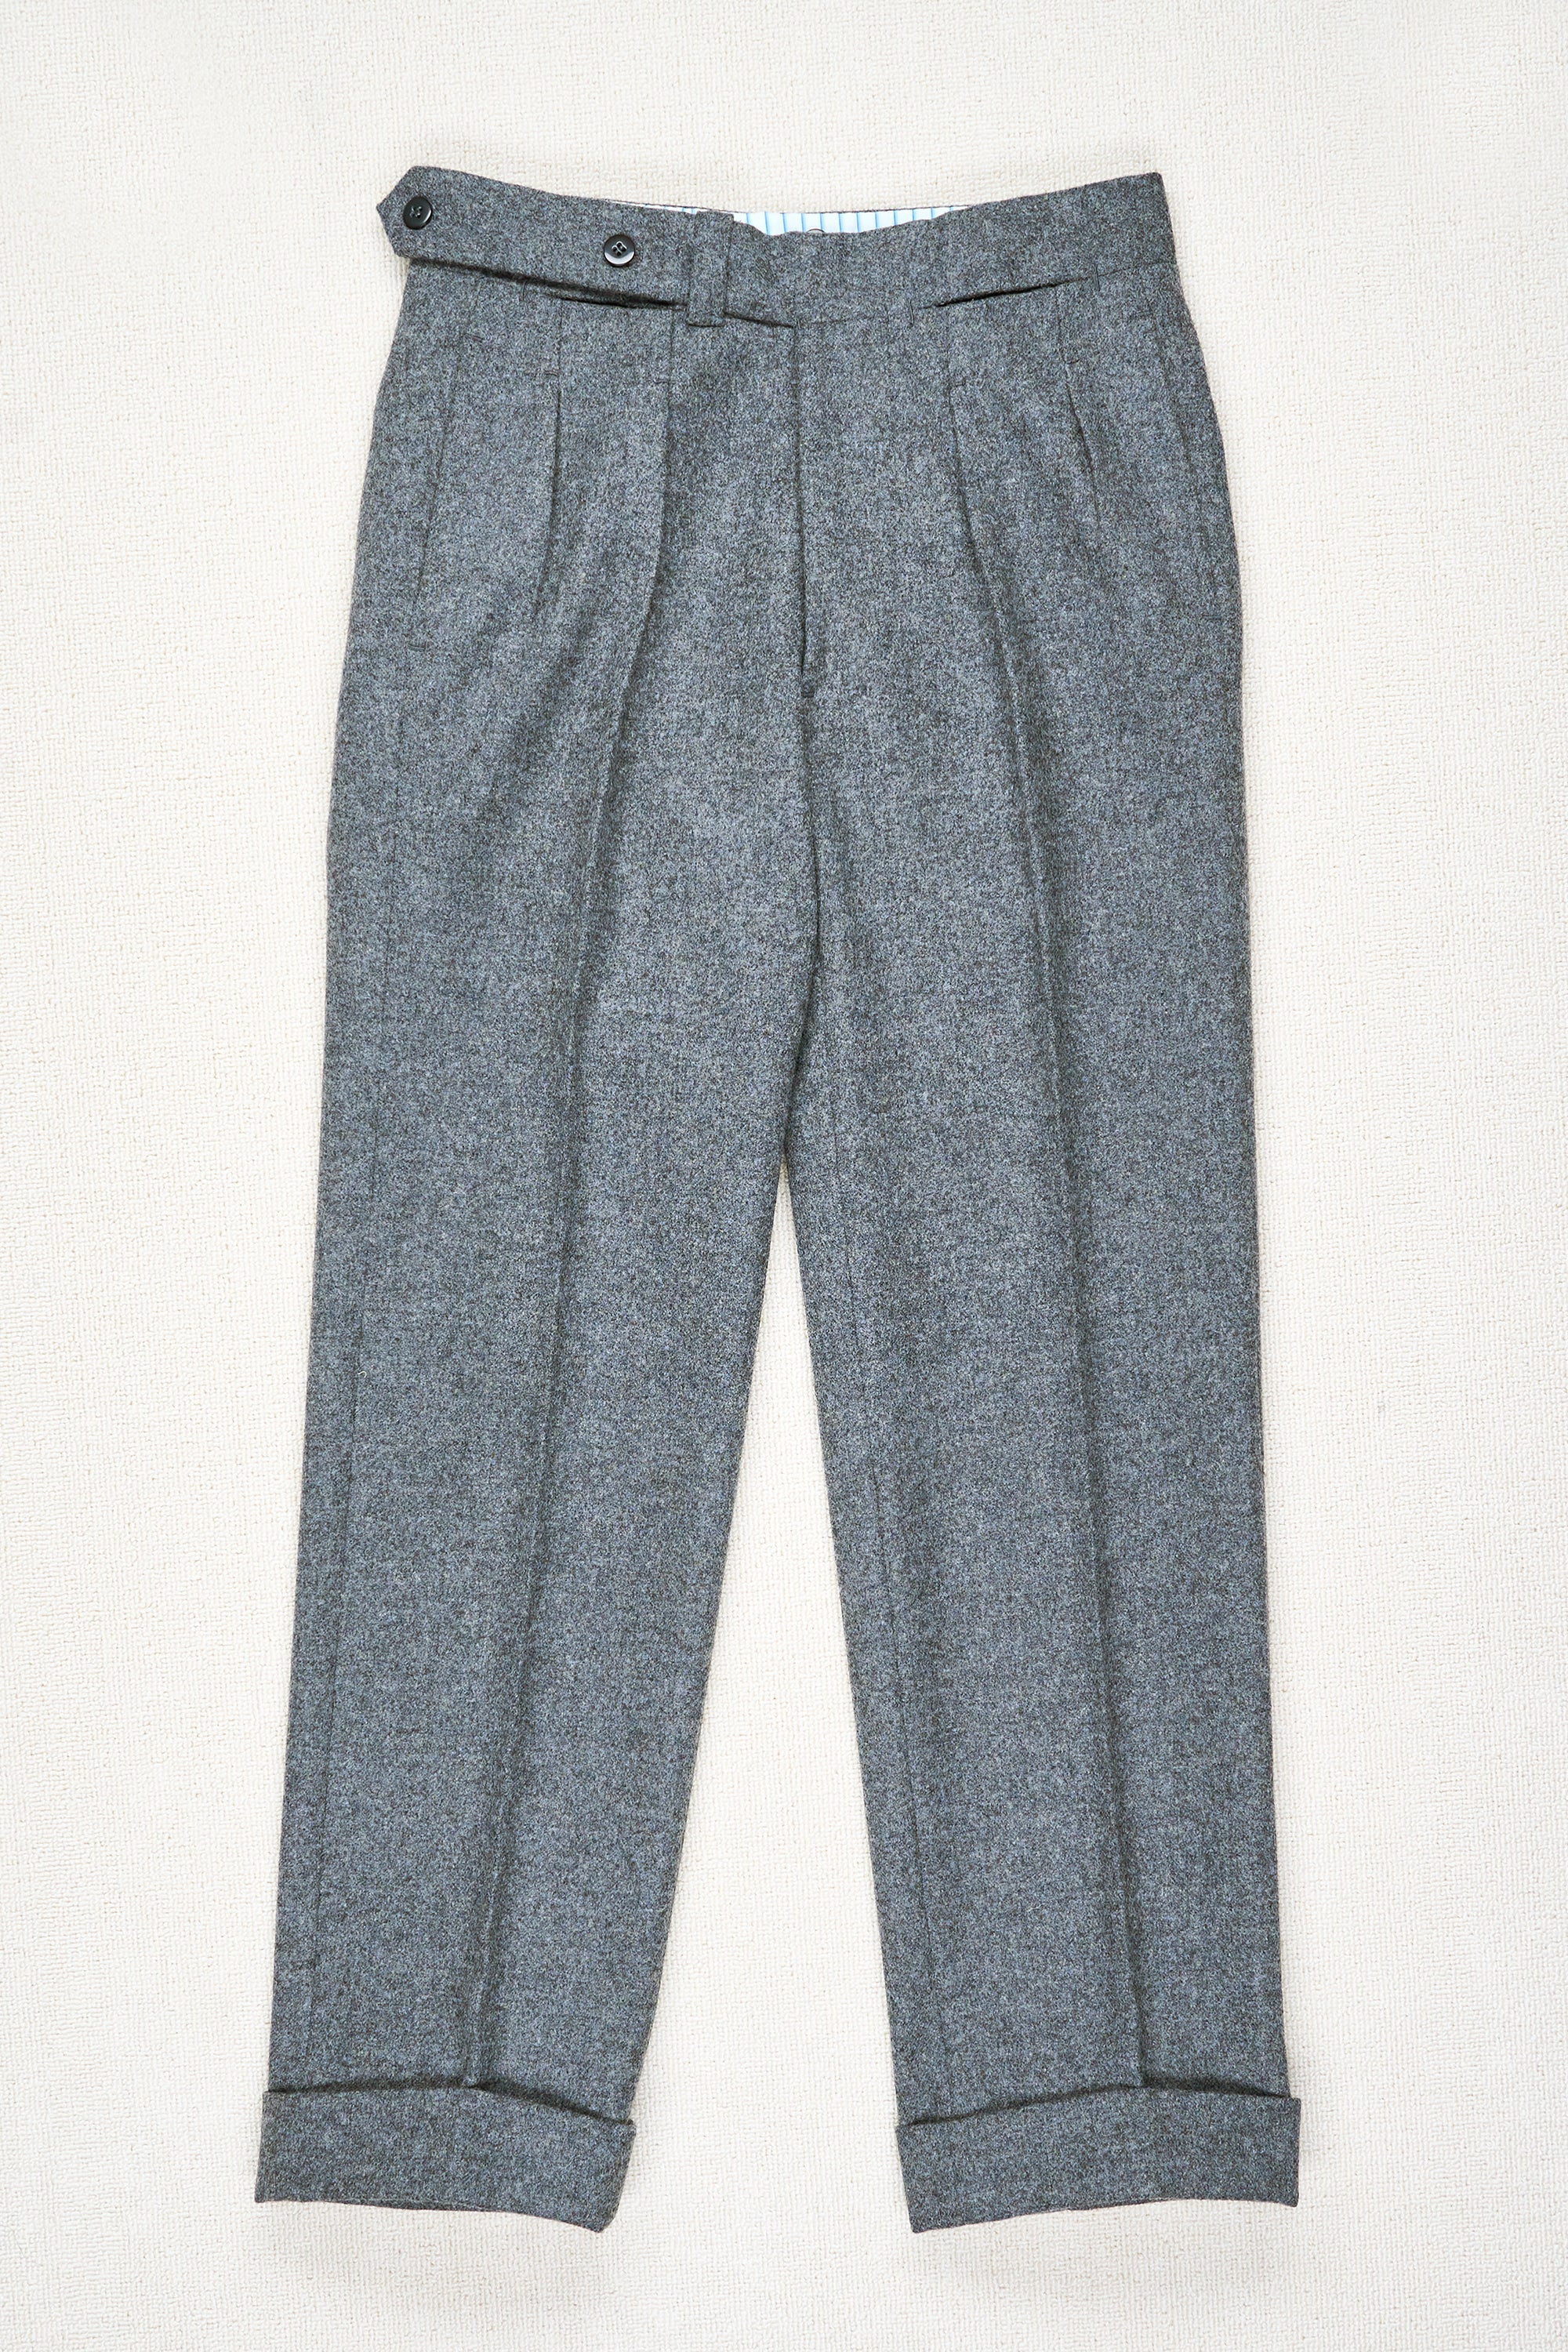 Ambrosi Napoli Grey Wool Flannel Double Pleat Trousers Bespoke